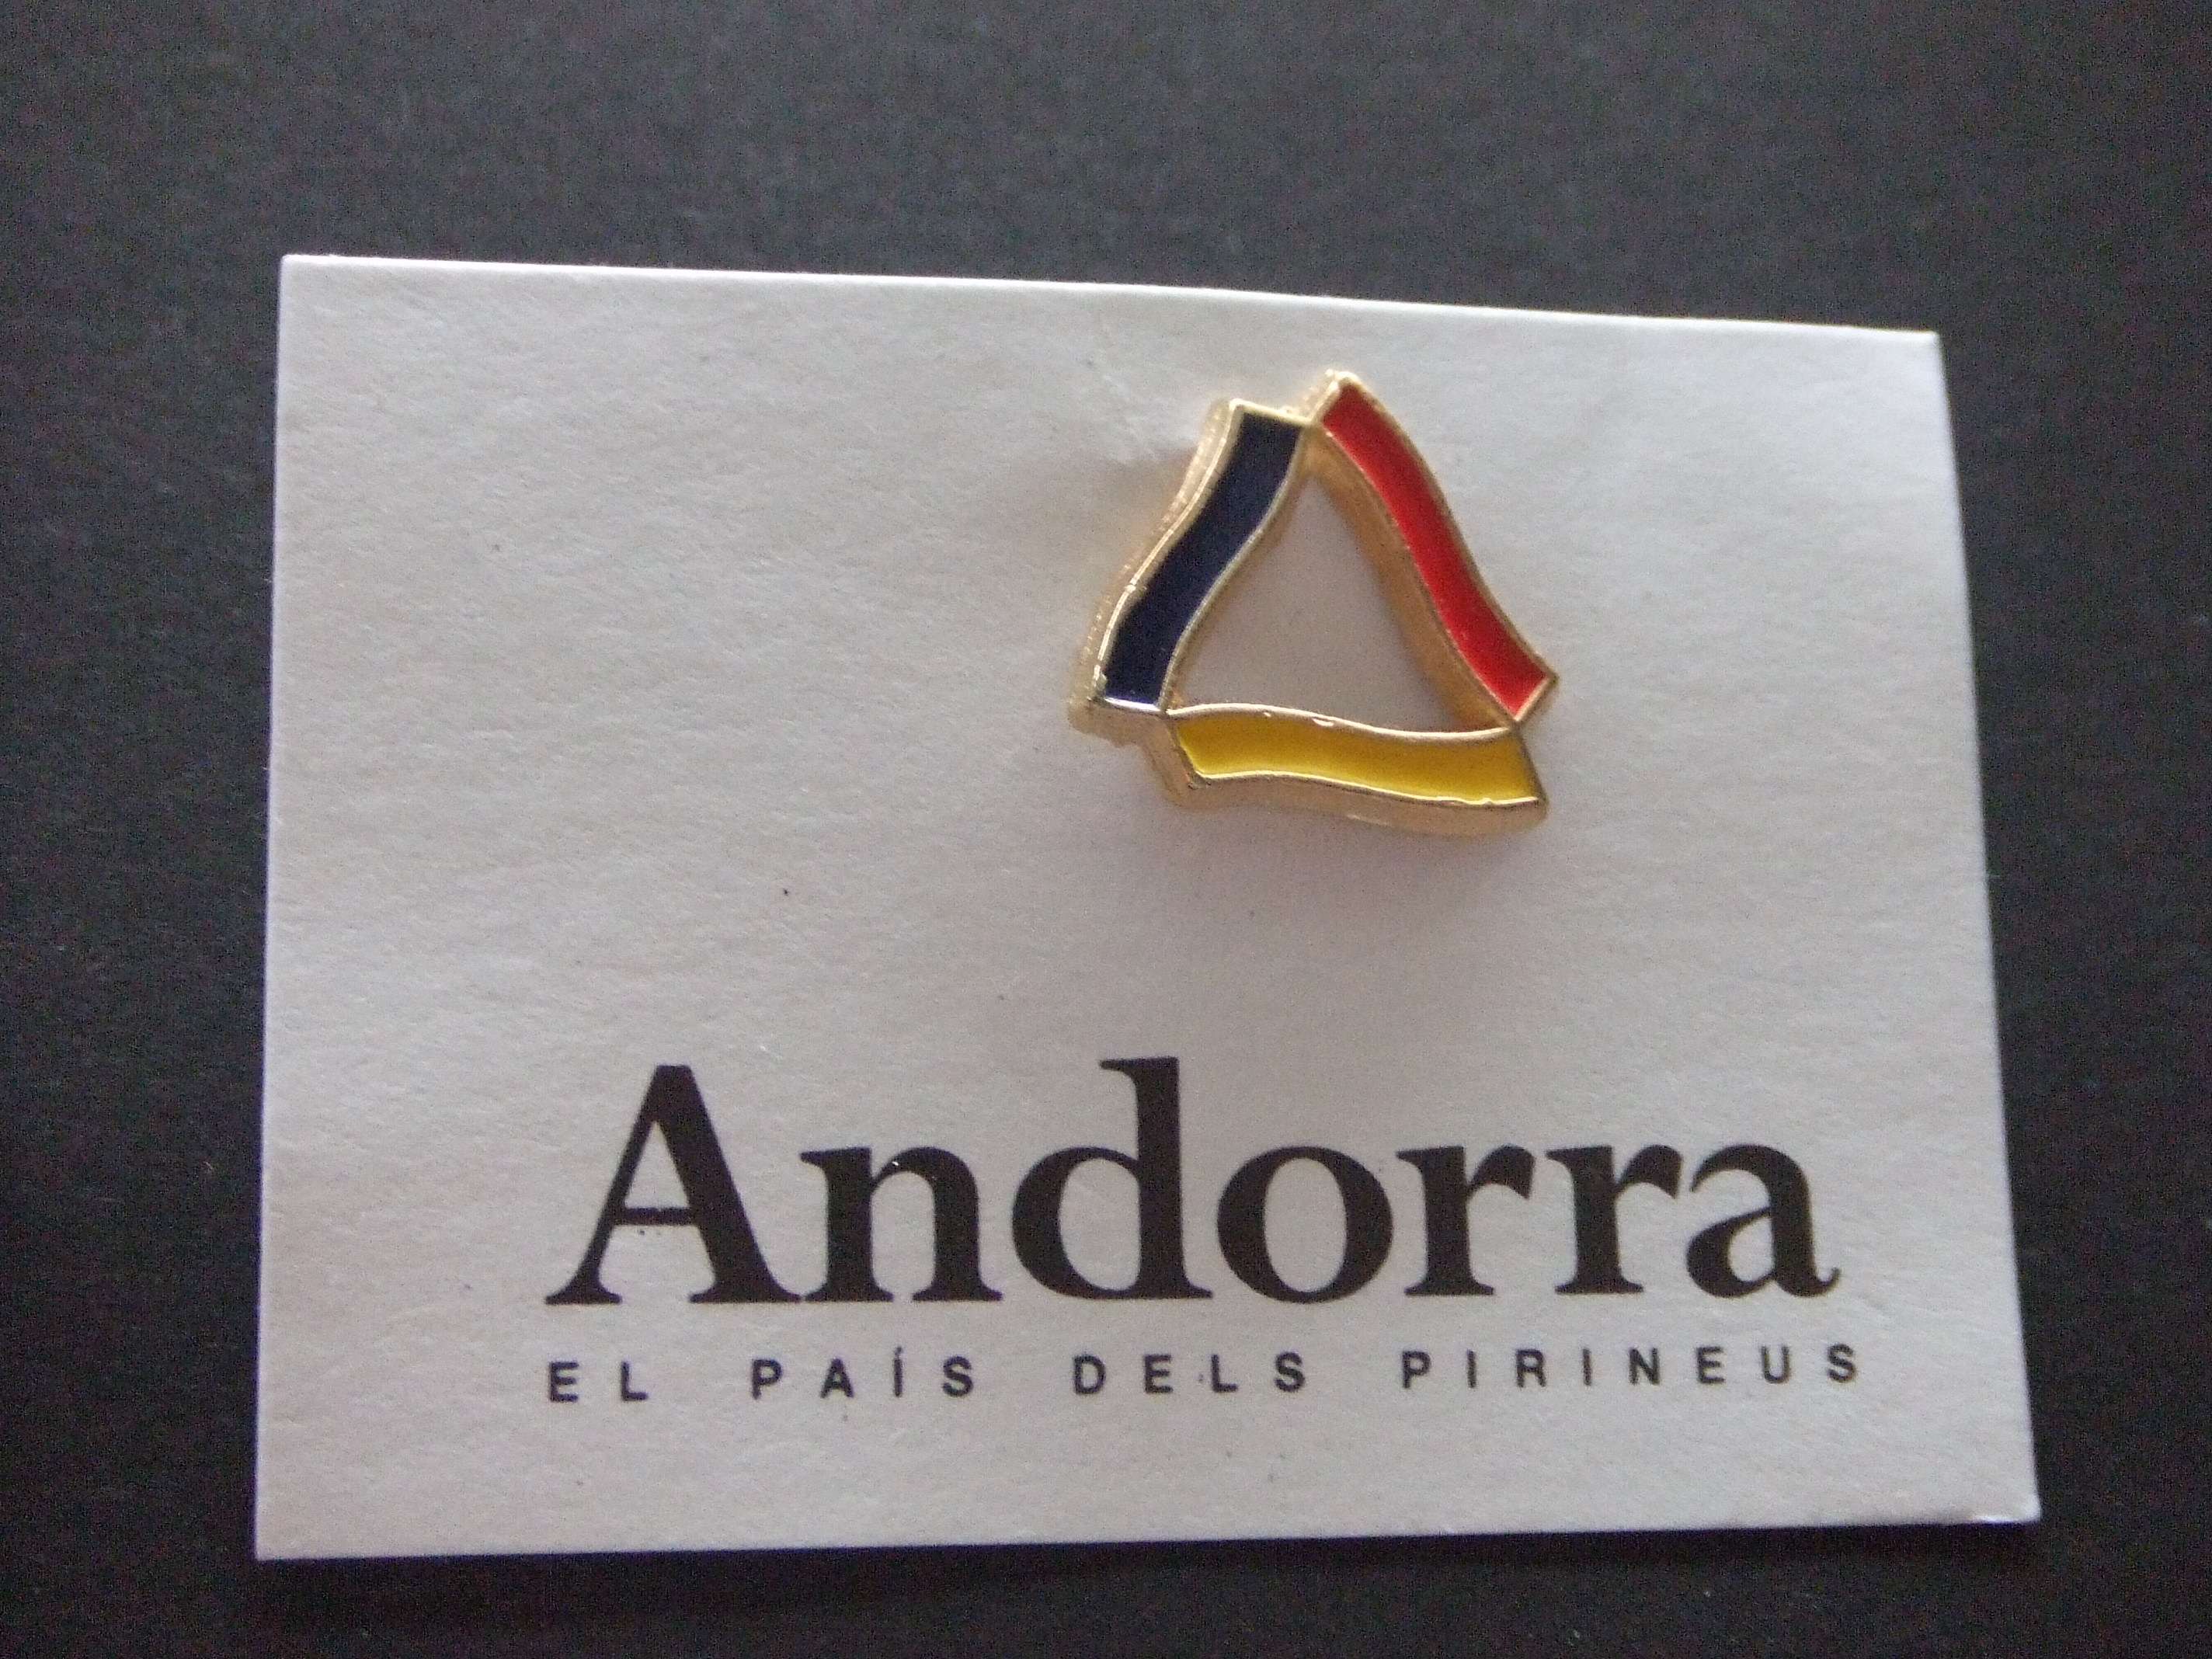 Andorra vorstendom belastingparadijs